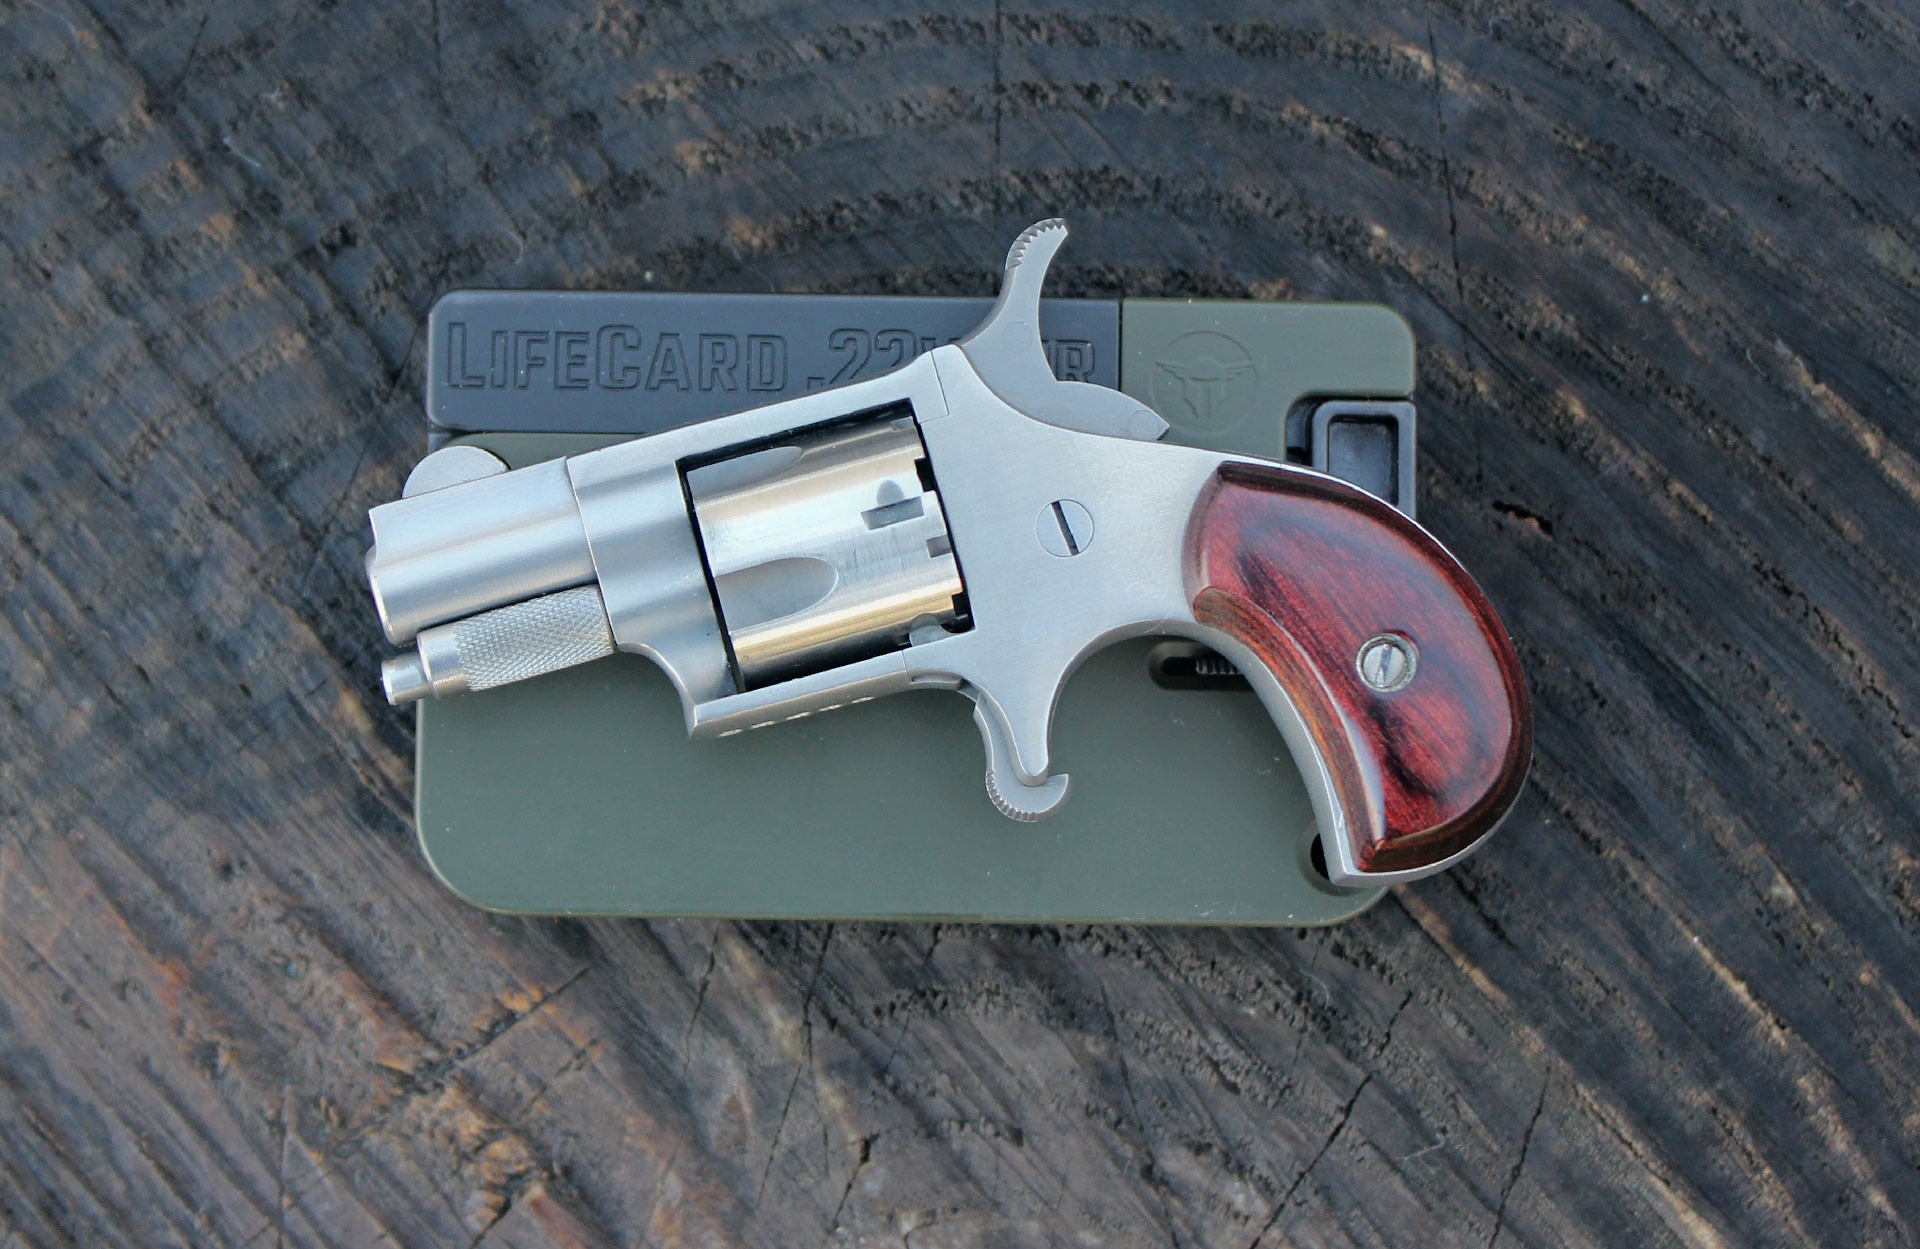 North American Arms revolver on lifecard folding handgun pistol guns wood table outdoors